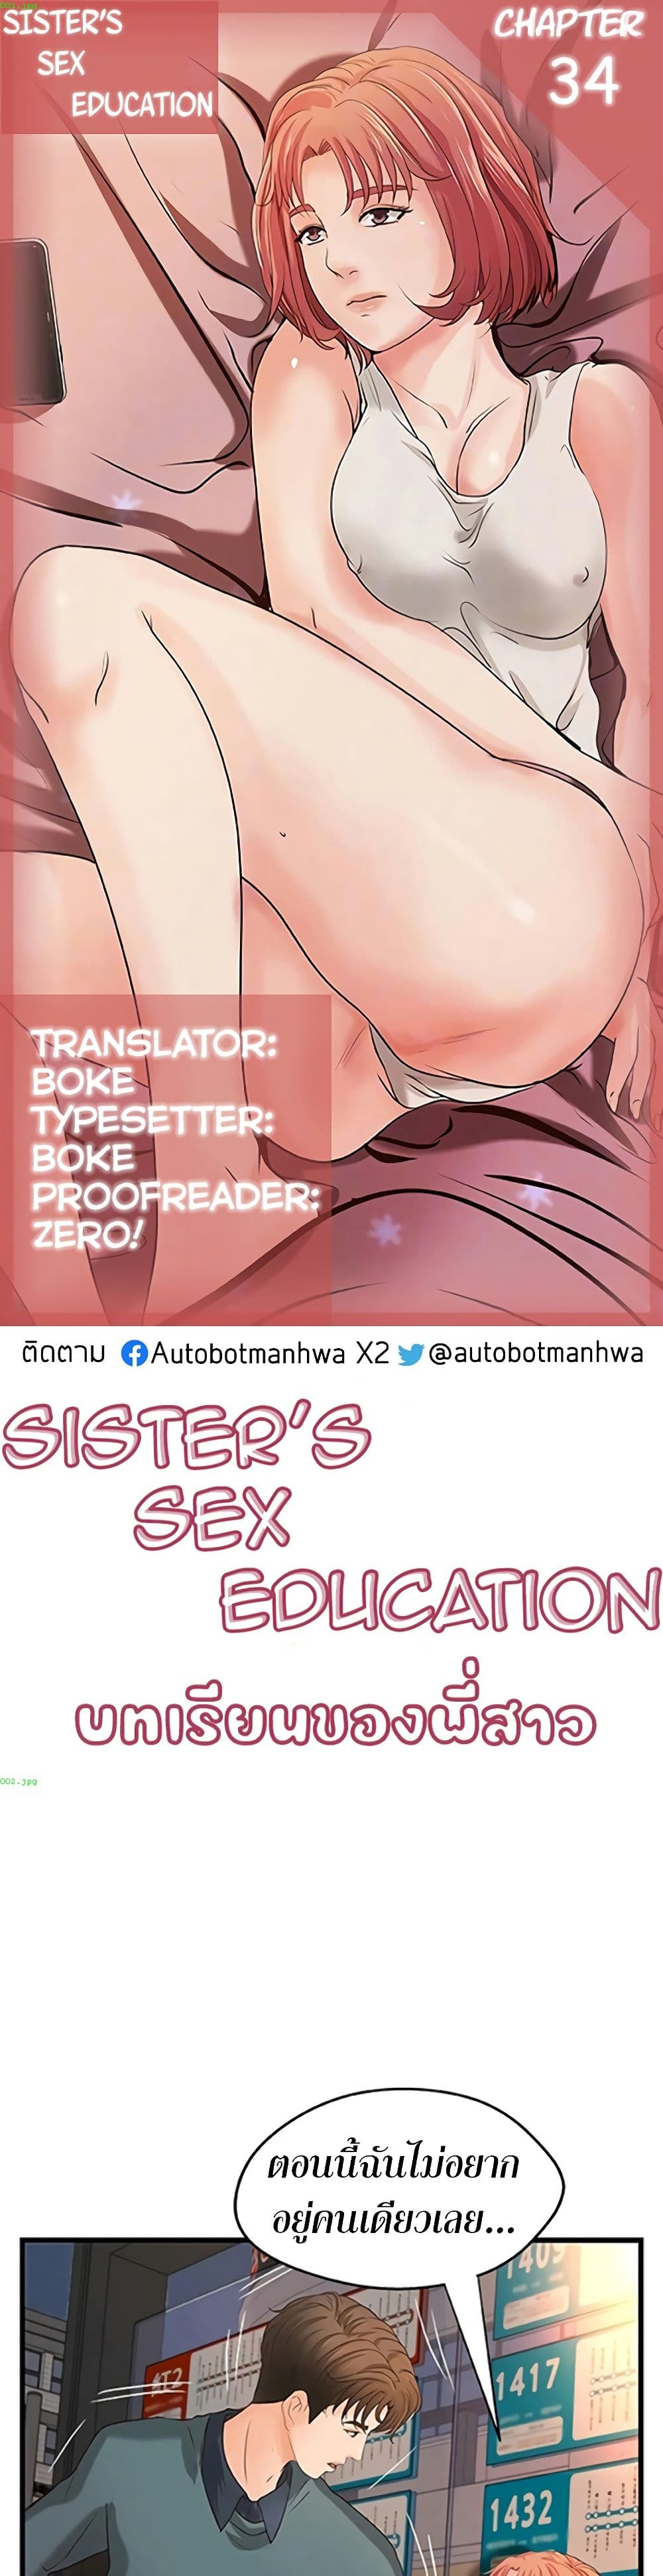 Sister's Sex Education 34 (1)